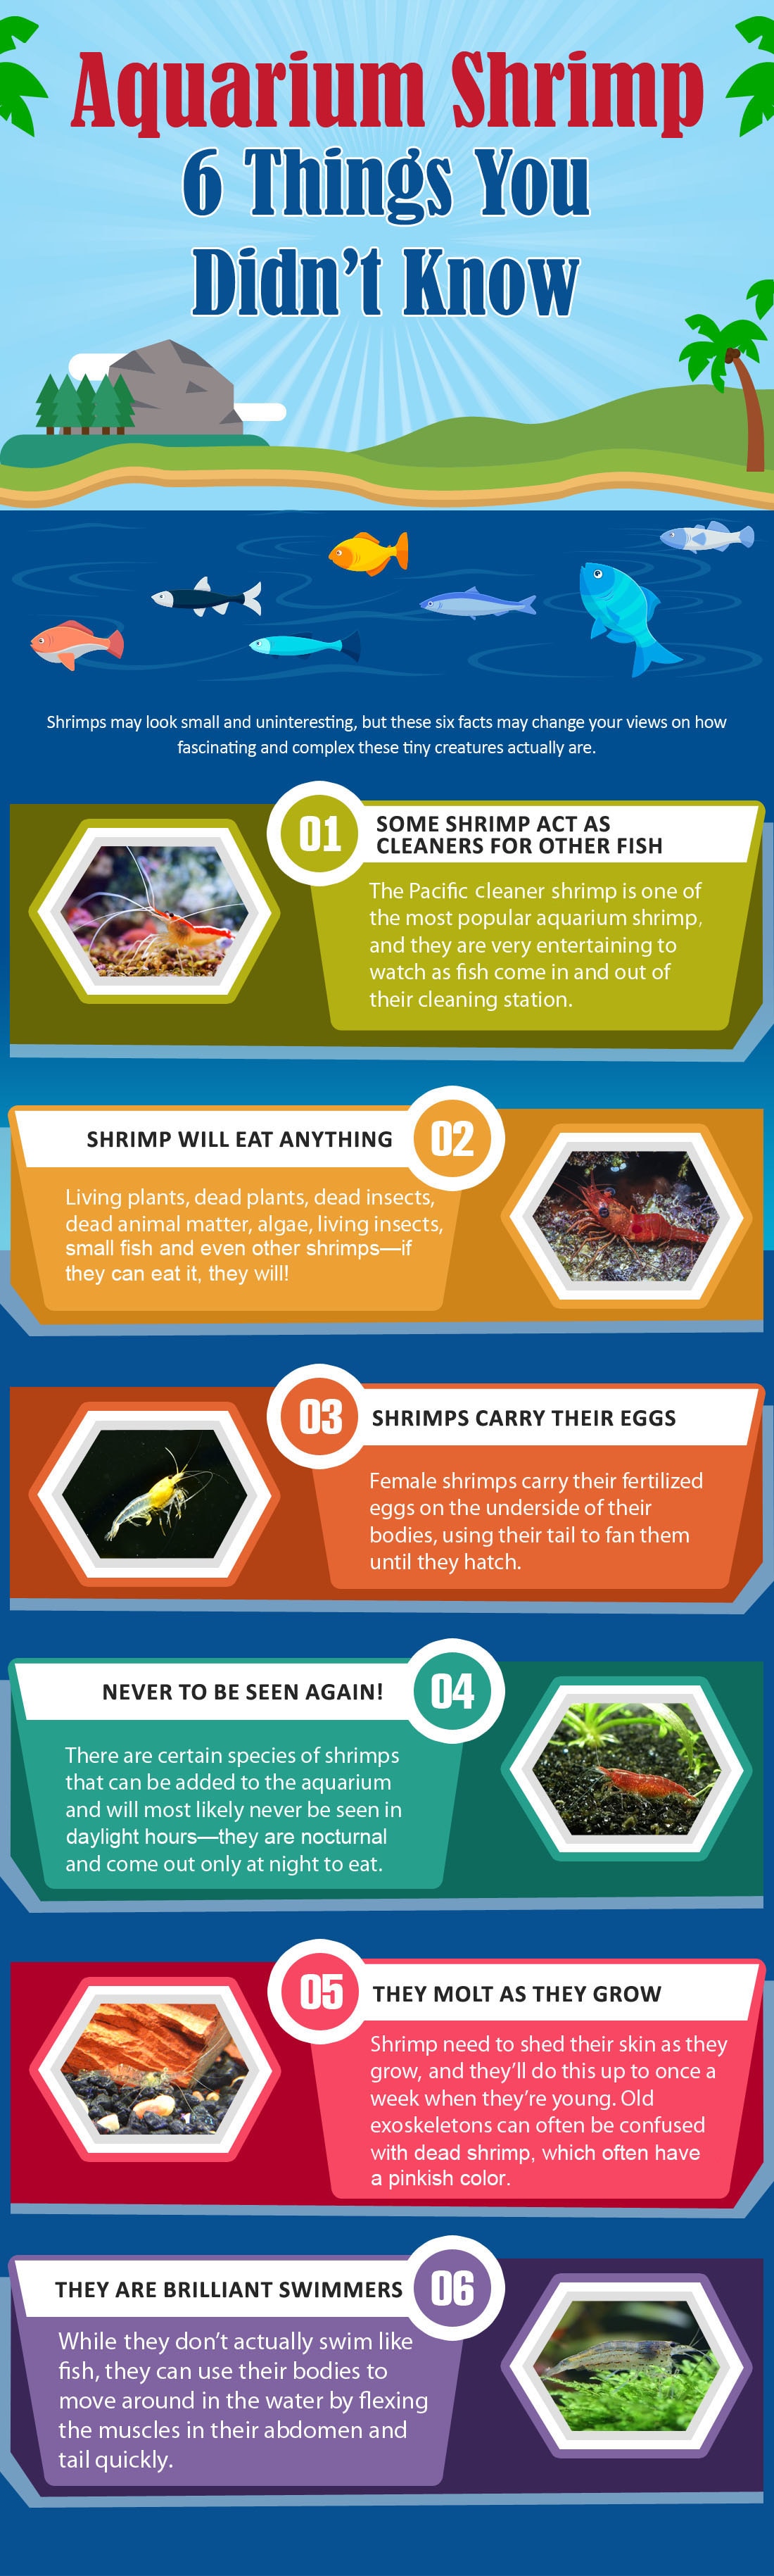 Facts about aquarium shrimp